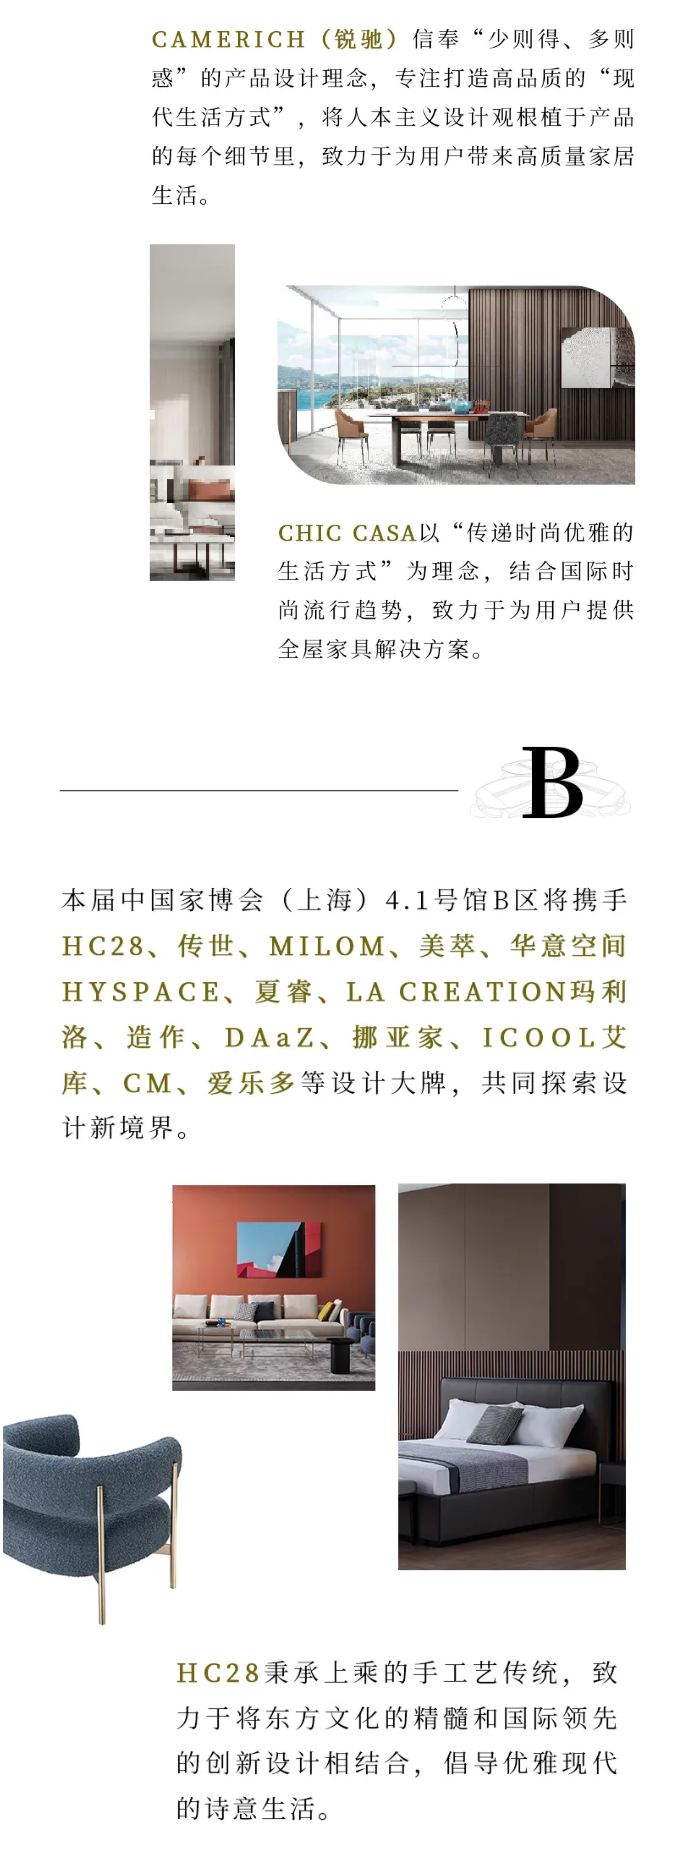 CIFF上海虹桥丨商业设计品牌殿堂，汇聚行业前沿创意！_04.png